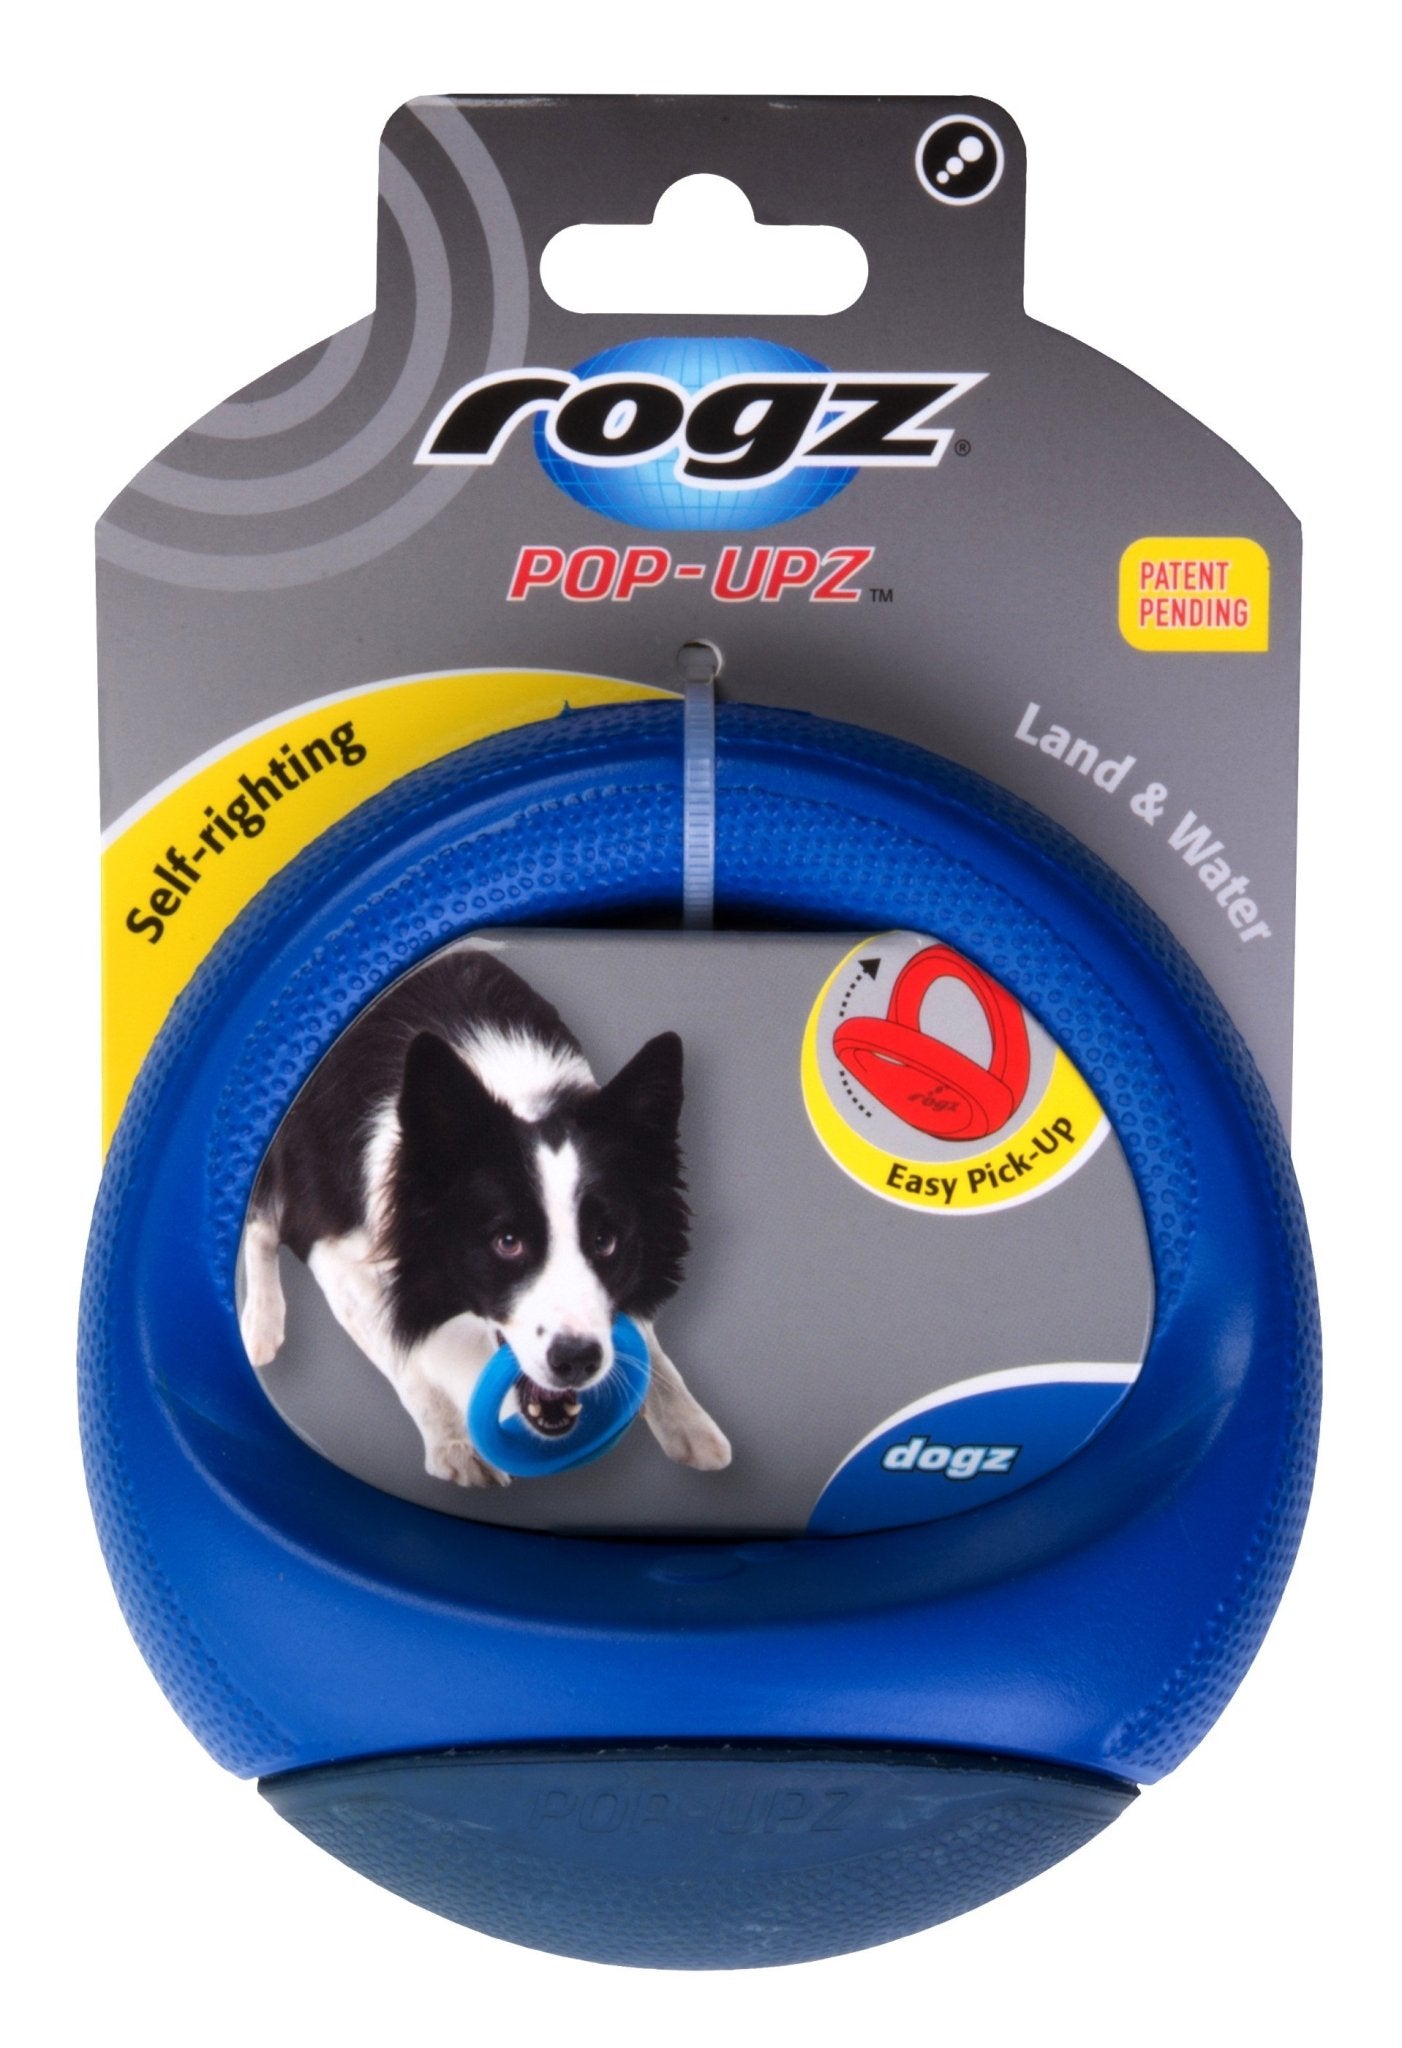 Rogz Dog Pop-Upz Self-Righting Float and Fetch Toy - Fetch Toys